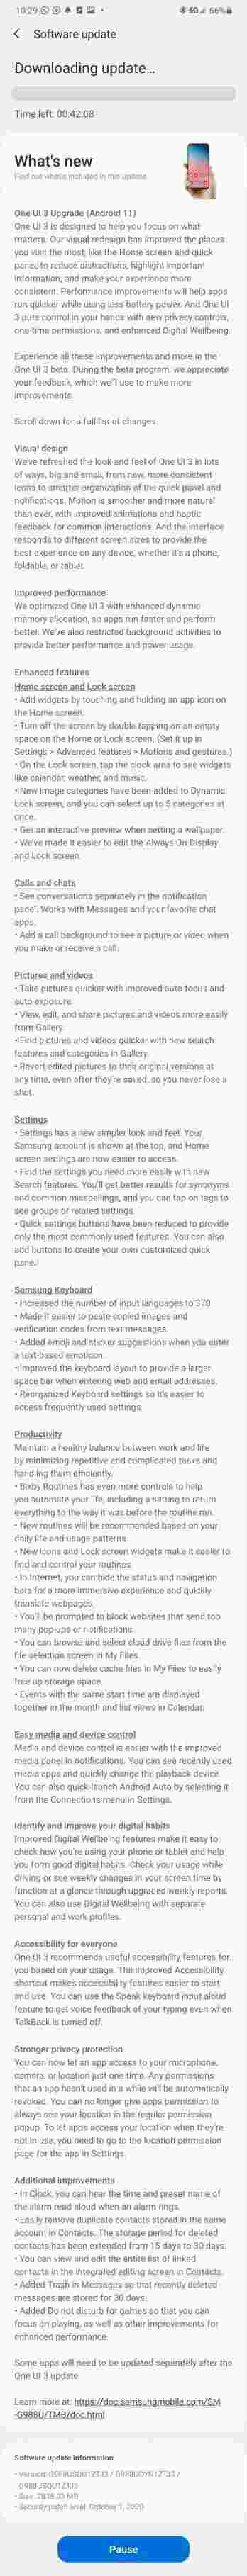 Samsung ปล่อย OneUI 3.0 Beta ให้กับ Galaxy S20, S20+, S20 Ultra ในสหรัฐอเมริกาแล้ว